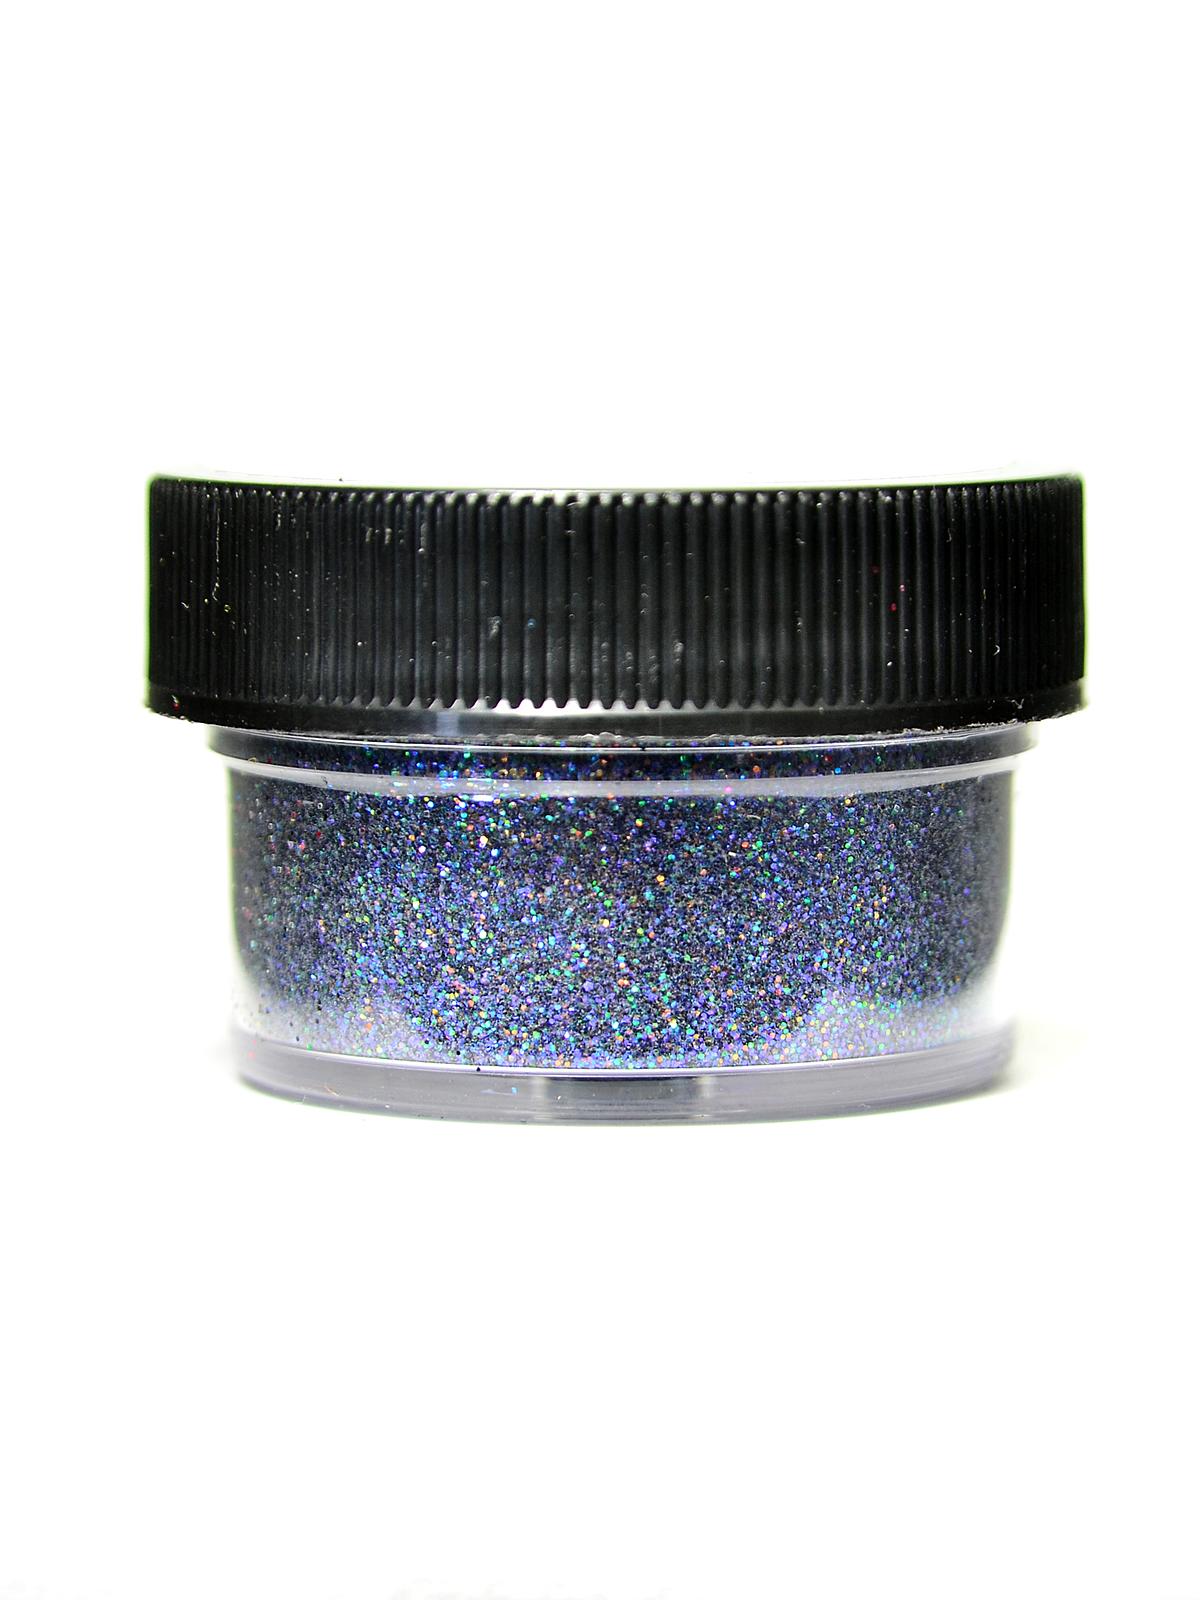 Ultrafine Transparent Glitter Abyss 1 2 Oz. Jar